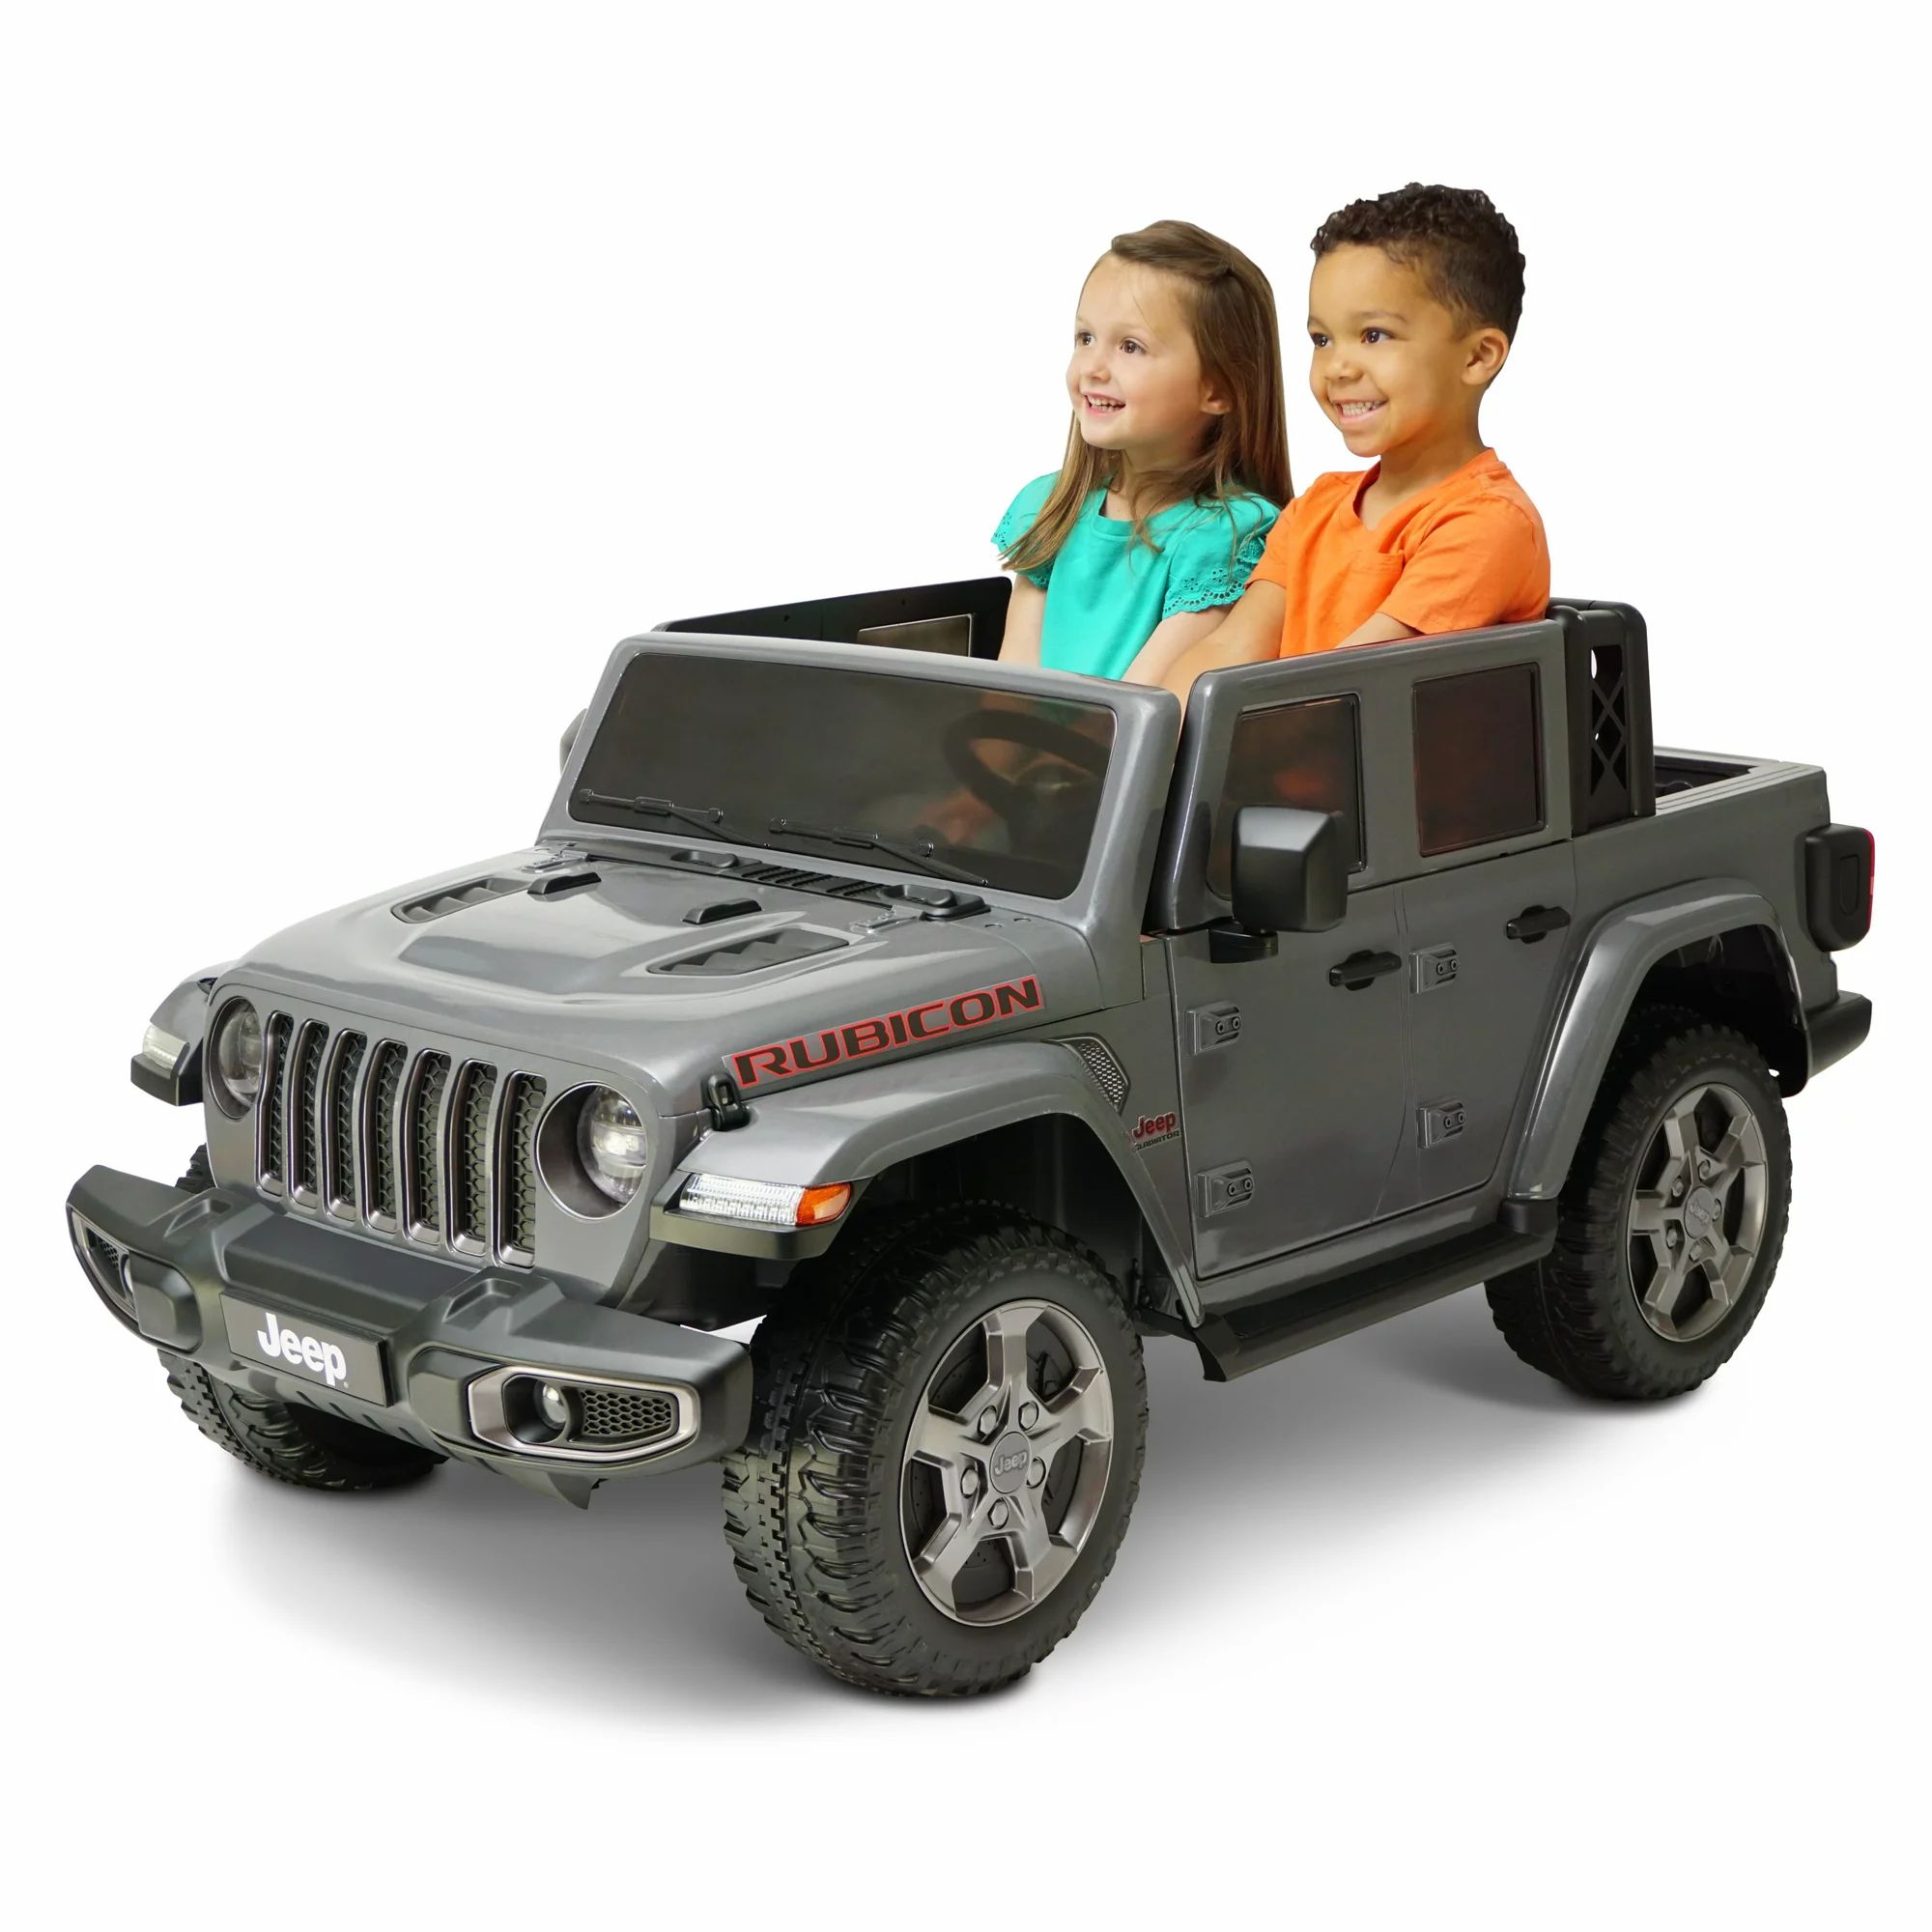 12 volt Jeep Gladiator Battery Powered Ride On Vehicle, Gray | Walmart (US)